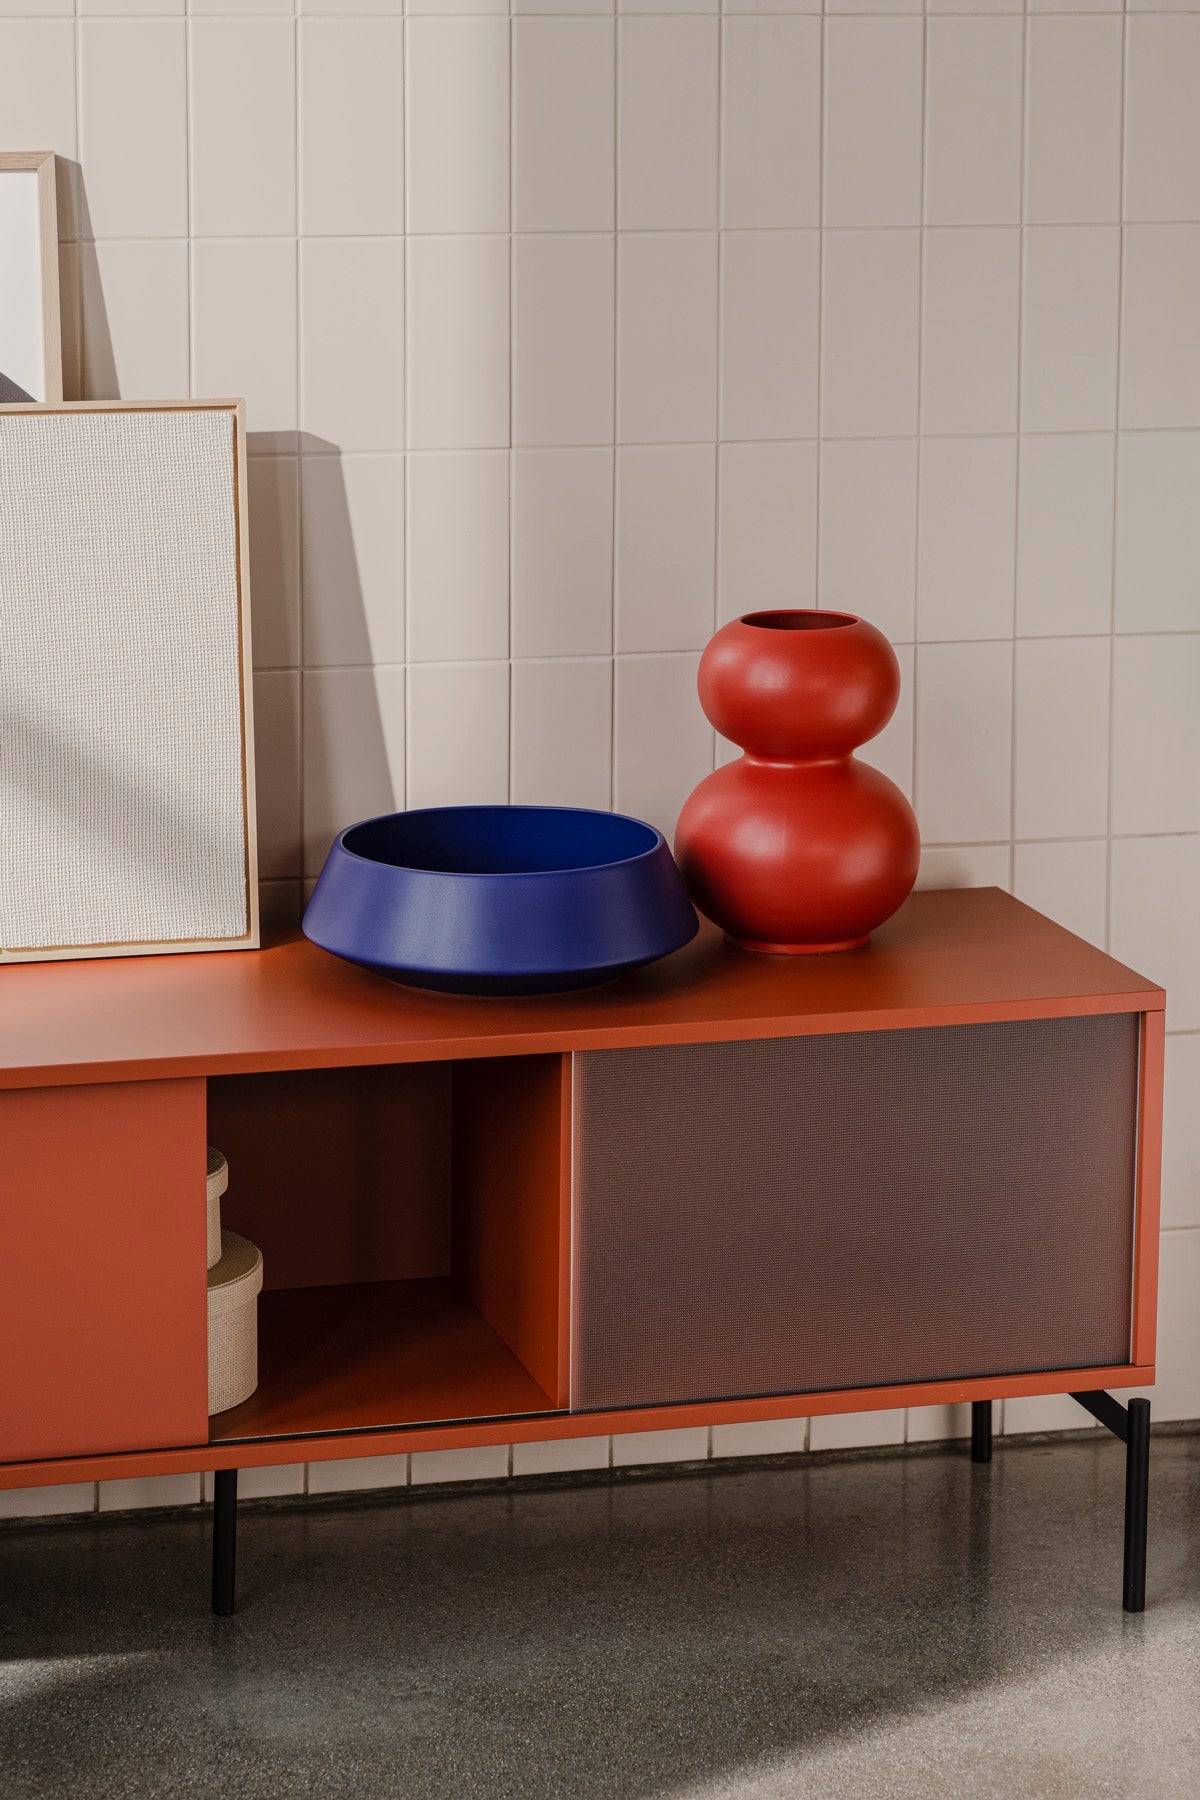 gift-guide indoor living-room terracotta tv-stands bedroom blue bowls red vases 